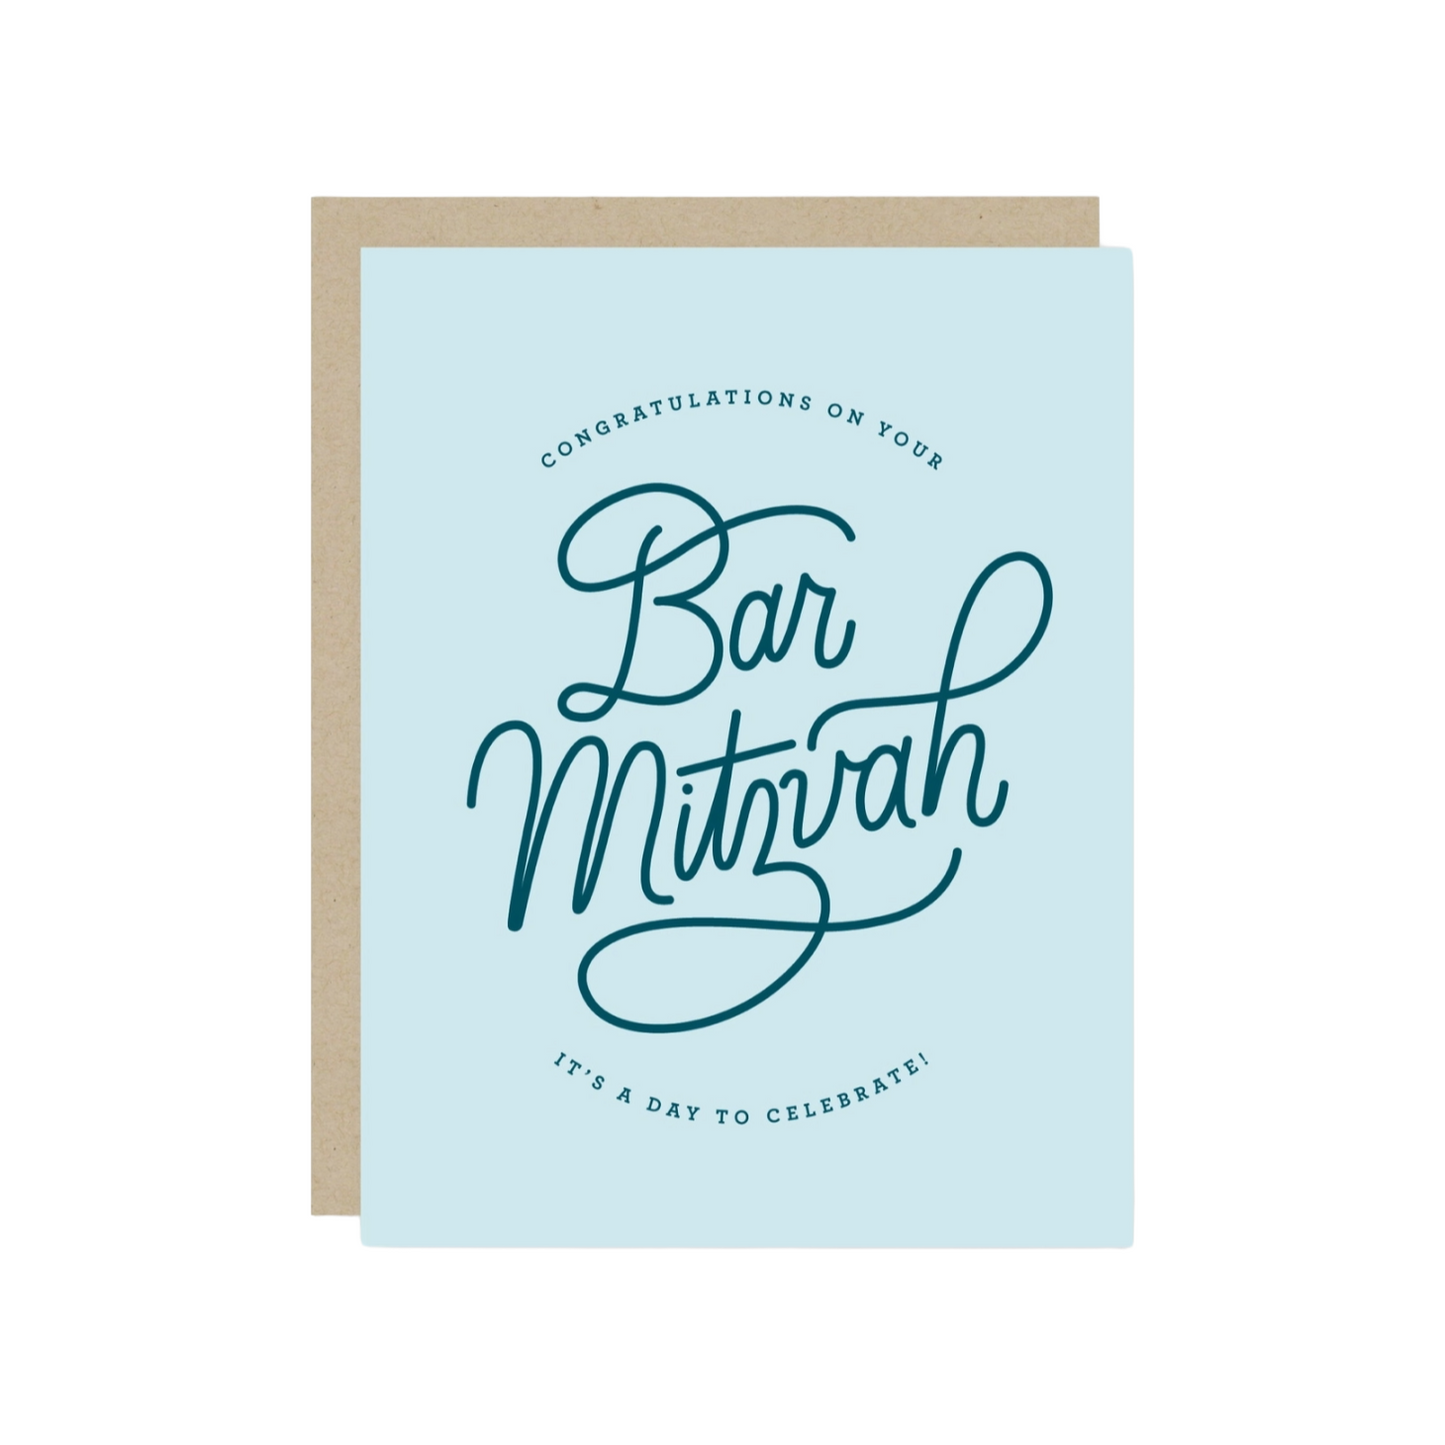 Congrats Bar Mitzvah Card by 2021 Co. 